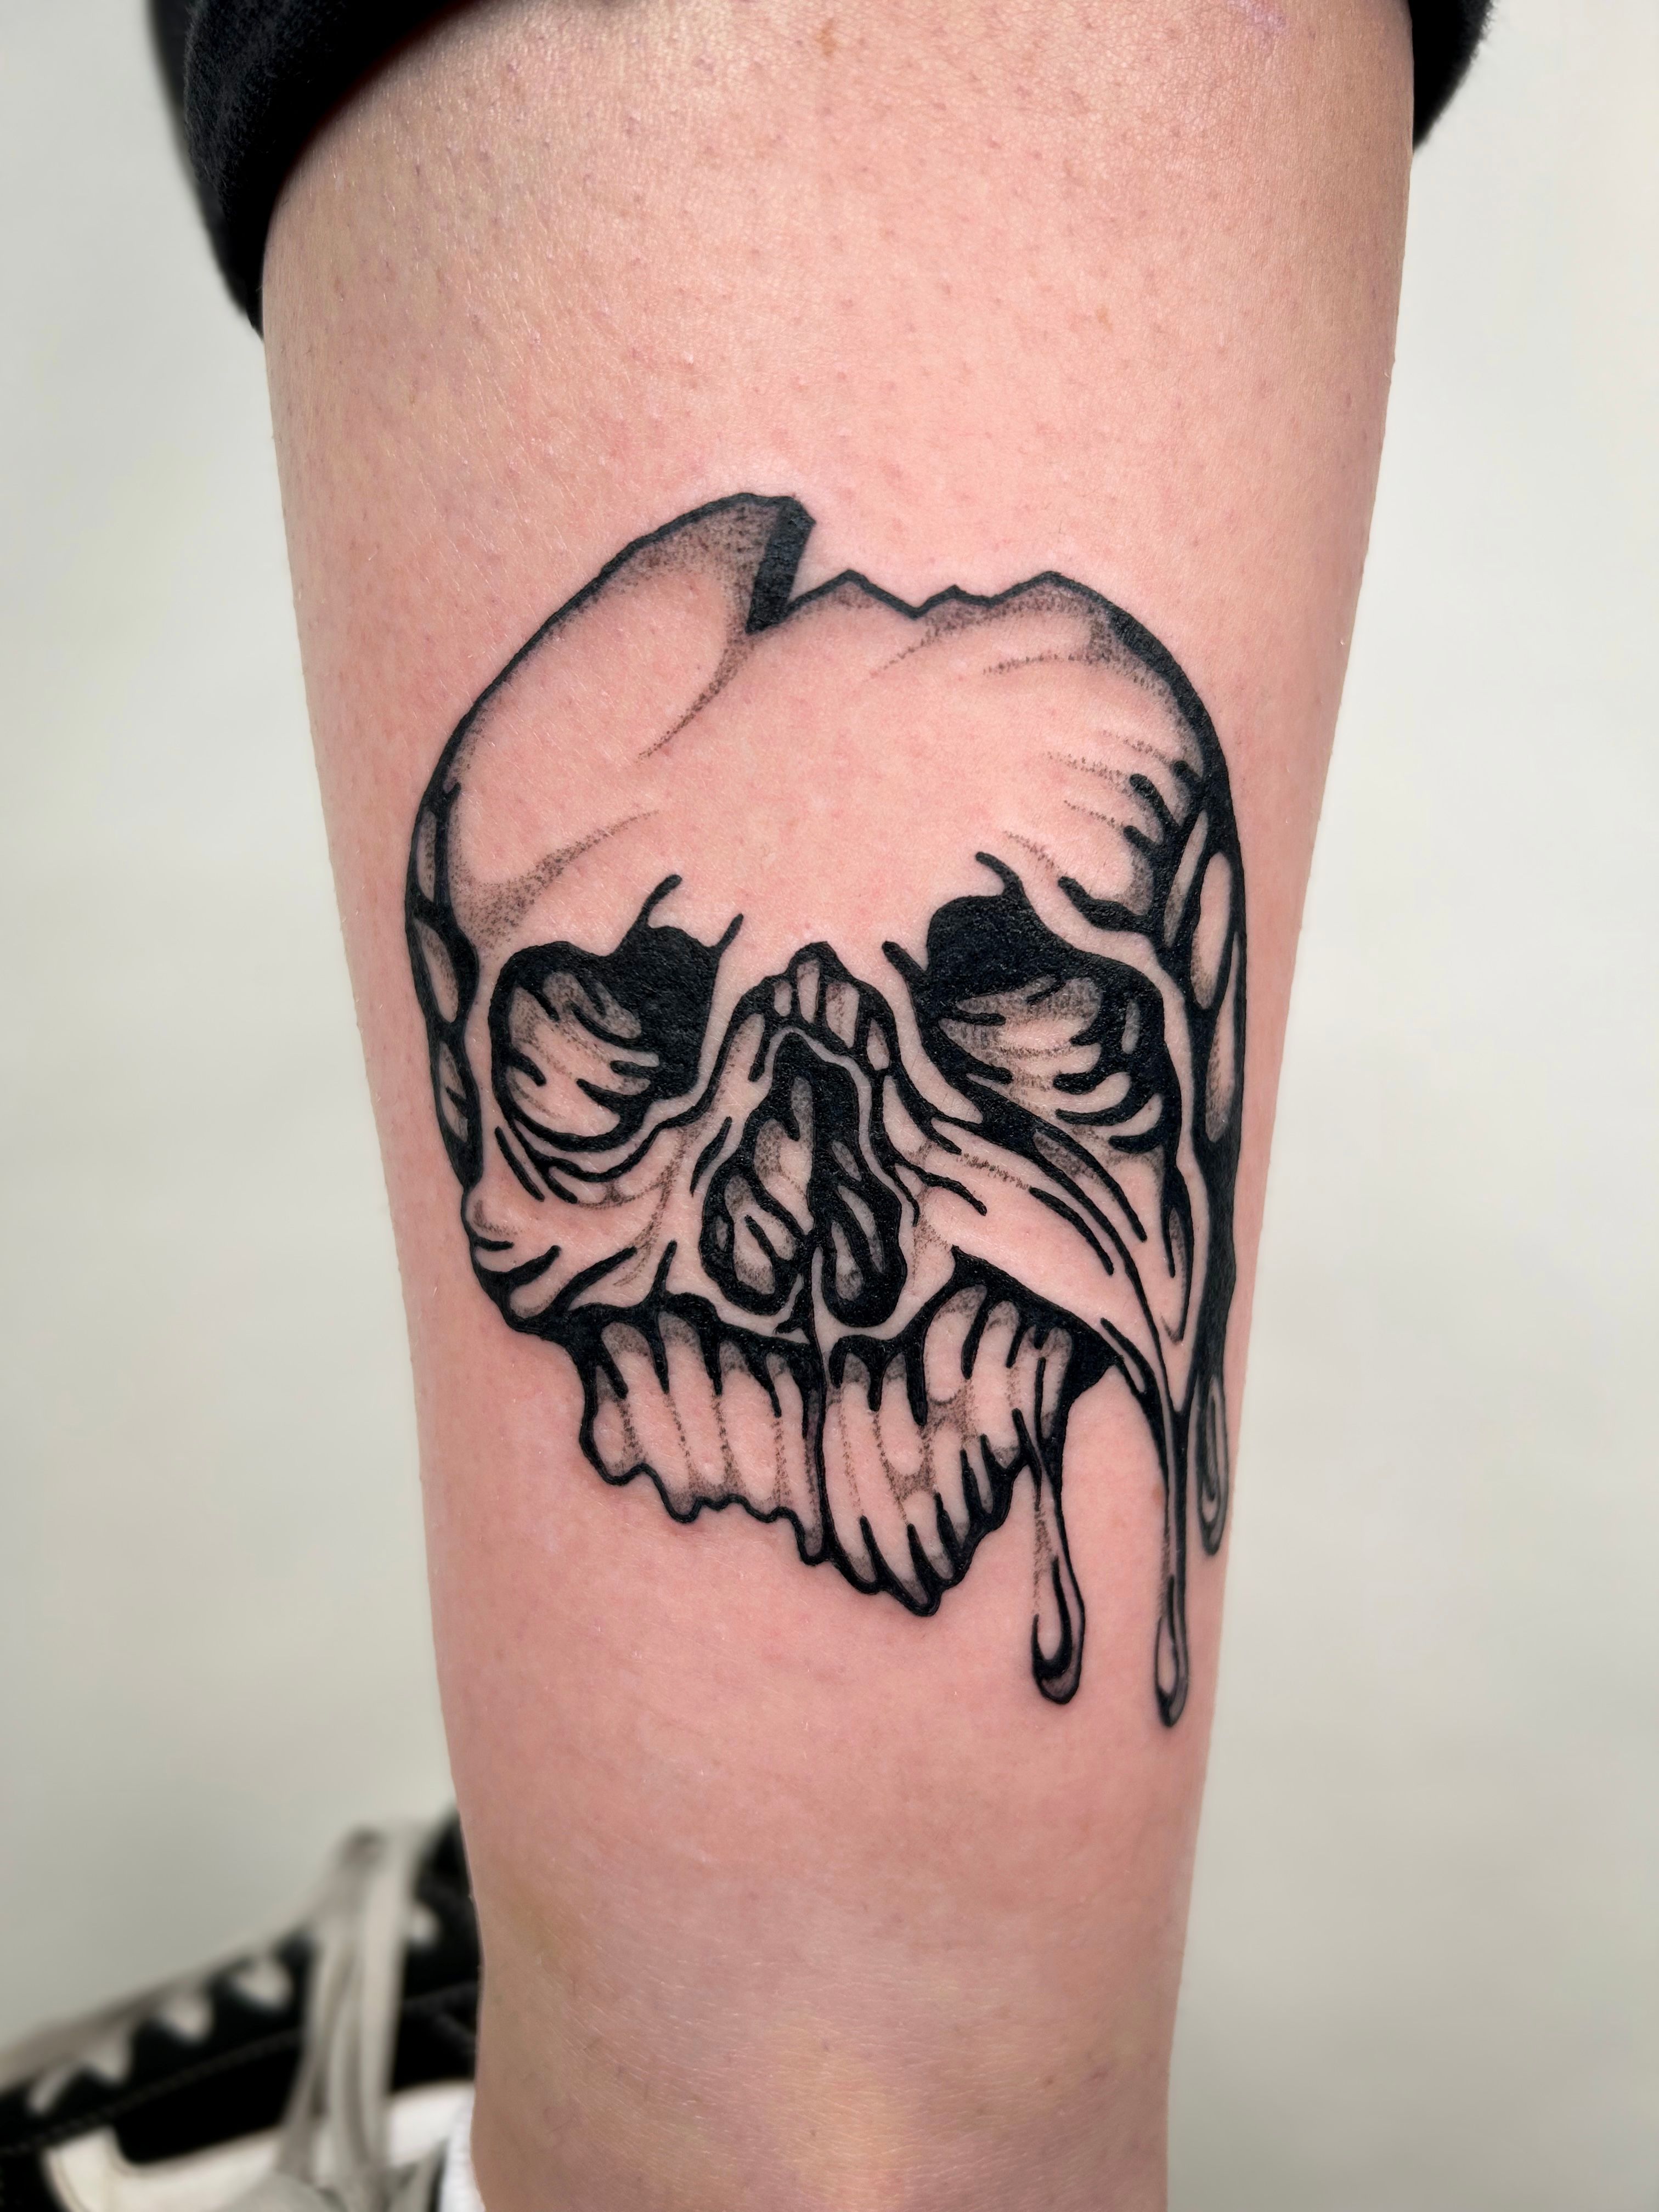 Pin by Alessandro Cianca on dream tats/piercings | Scary tattoos, Tattoo  art drawings, Creepy tattoos | Skull sleeve tattoos, Scary tattoos, Tattoo  design drawings